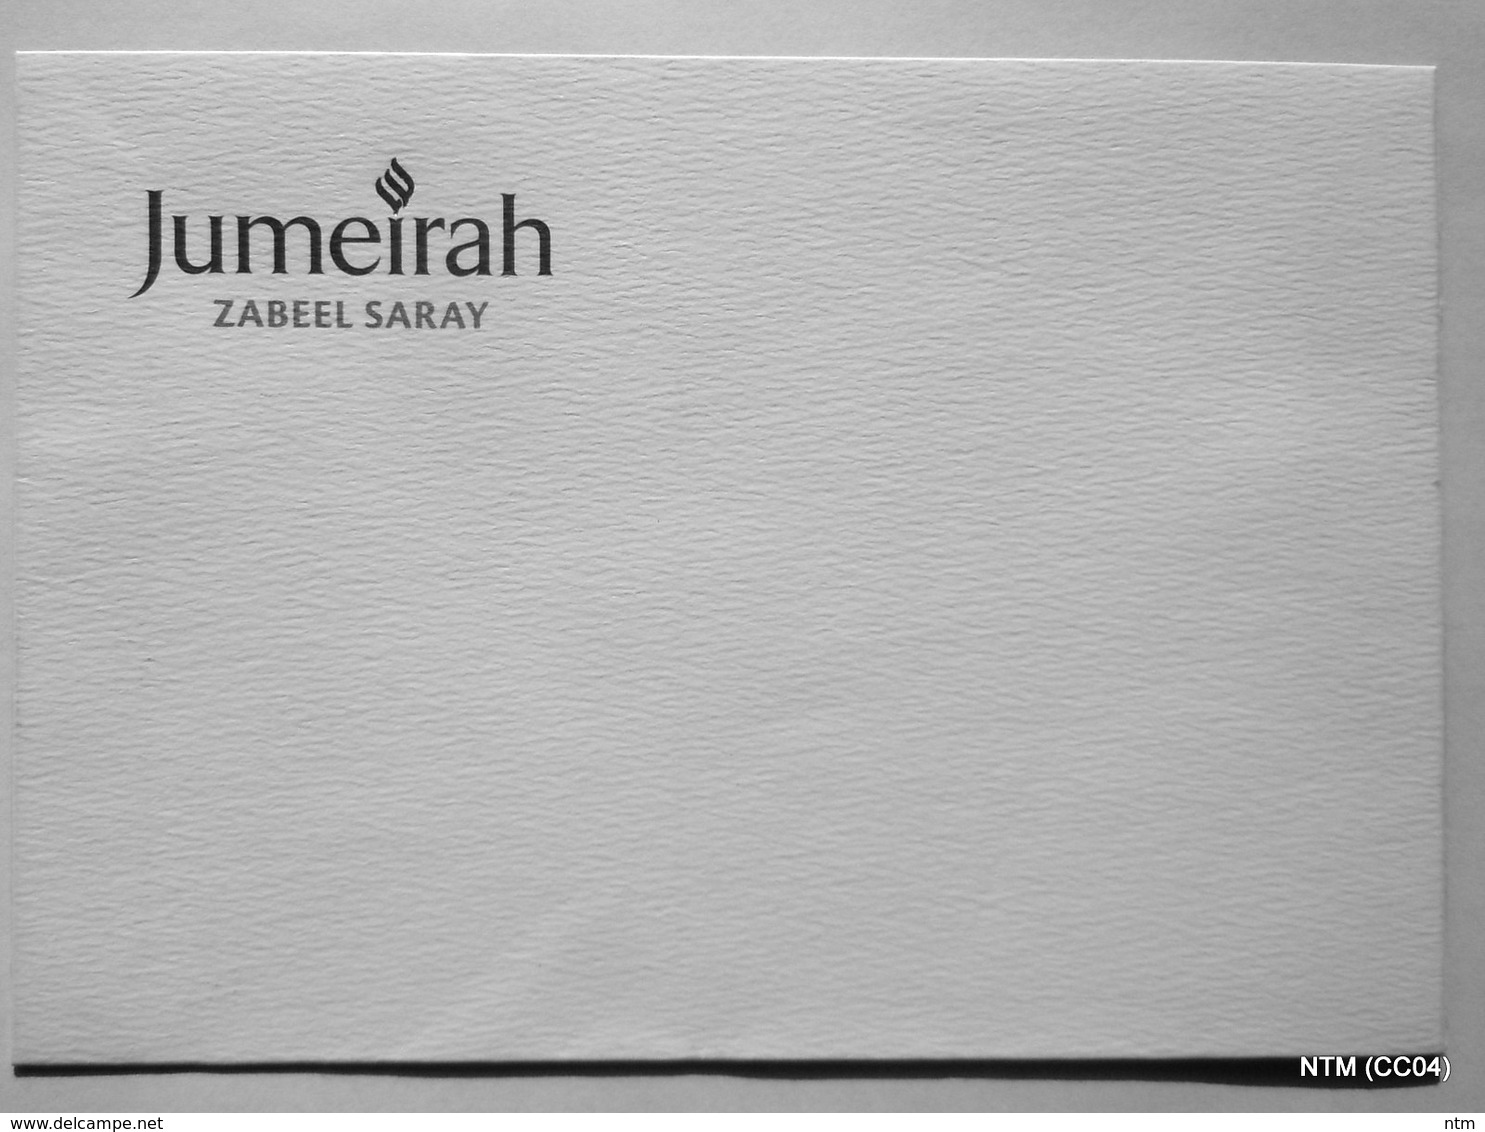 UAE DUBAI Picture Post Card (with An Envelope) Showing The Lobby In Hotel 'Jumeirah Zabeel Saray' In Dubai, UAE - Dubai